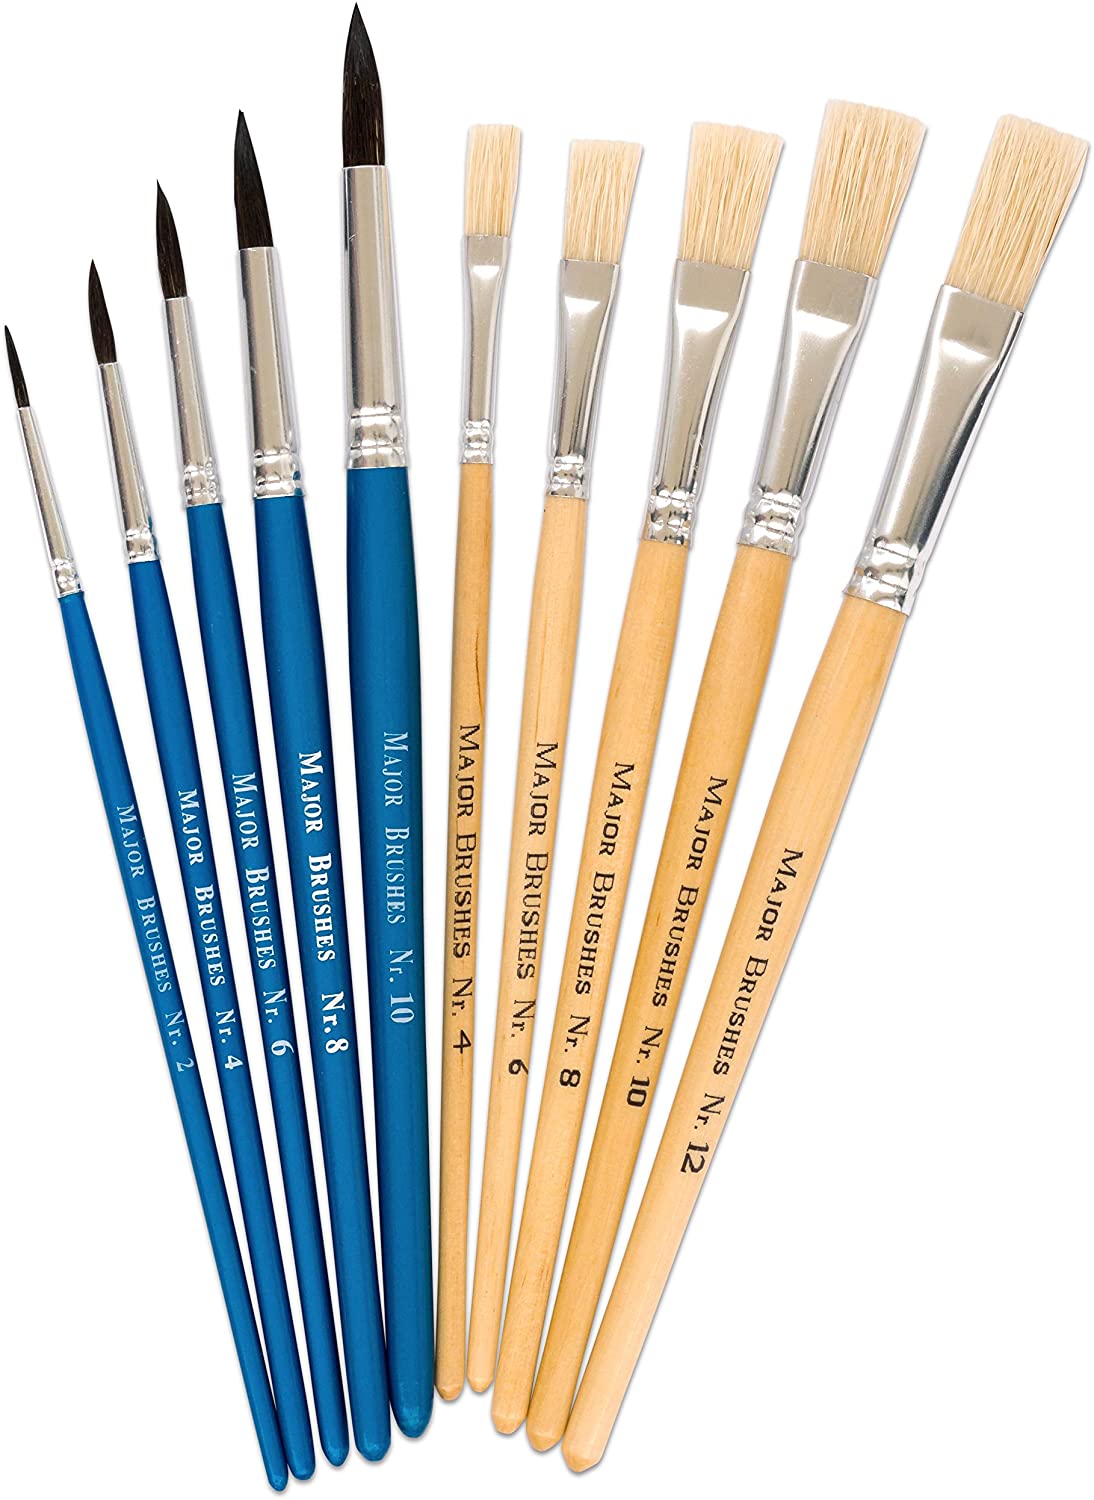 Betzold Brushes | 10 Paint Brush Pack